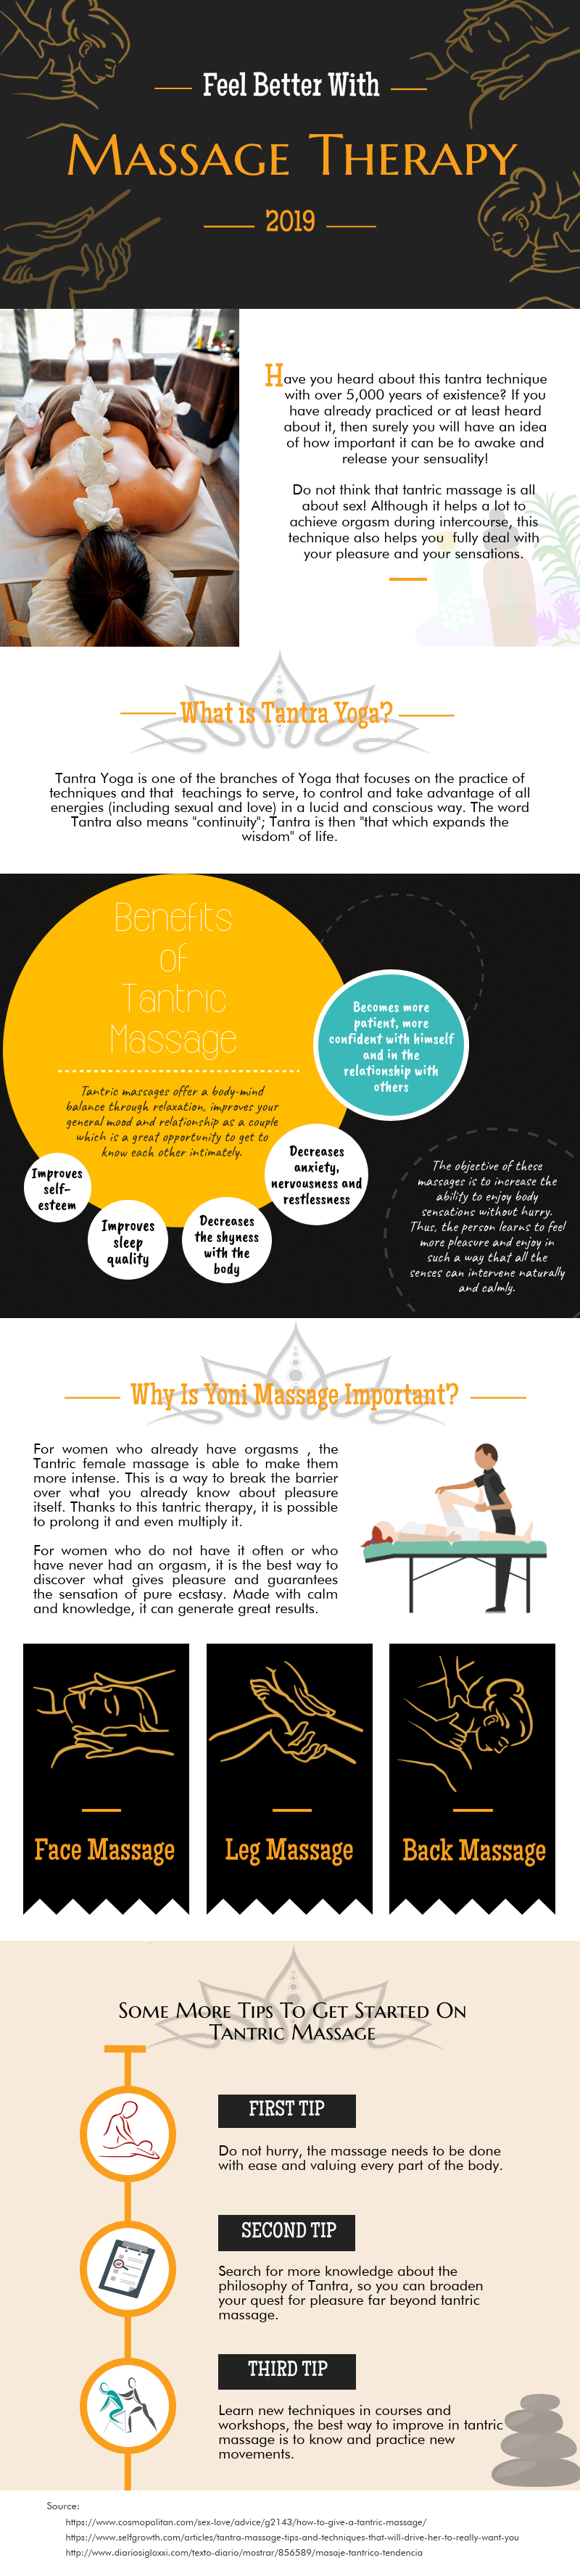 Eight Amazing Massage Benefits